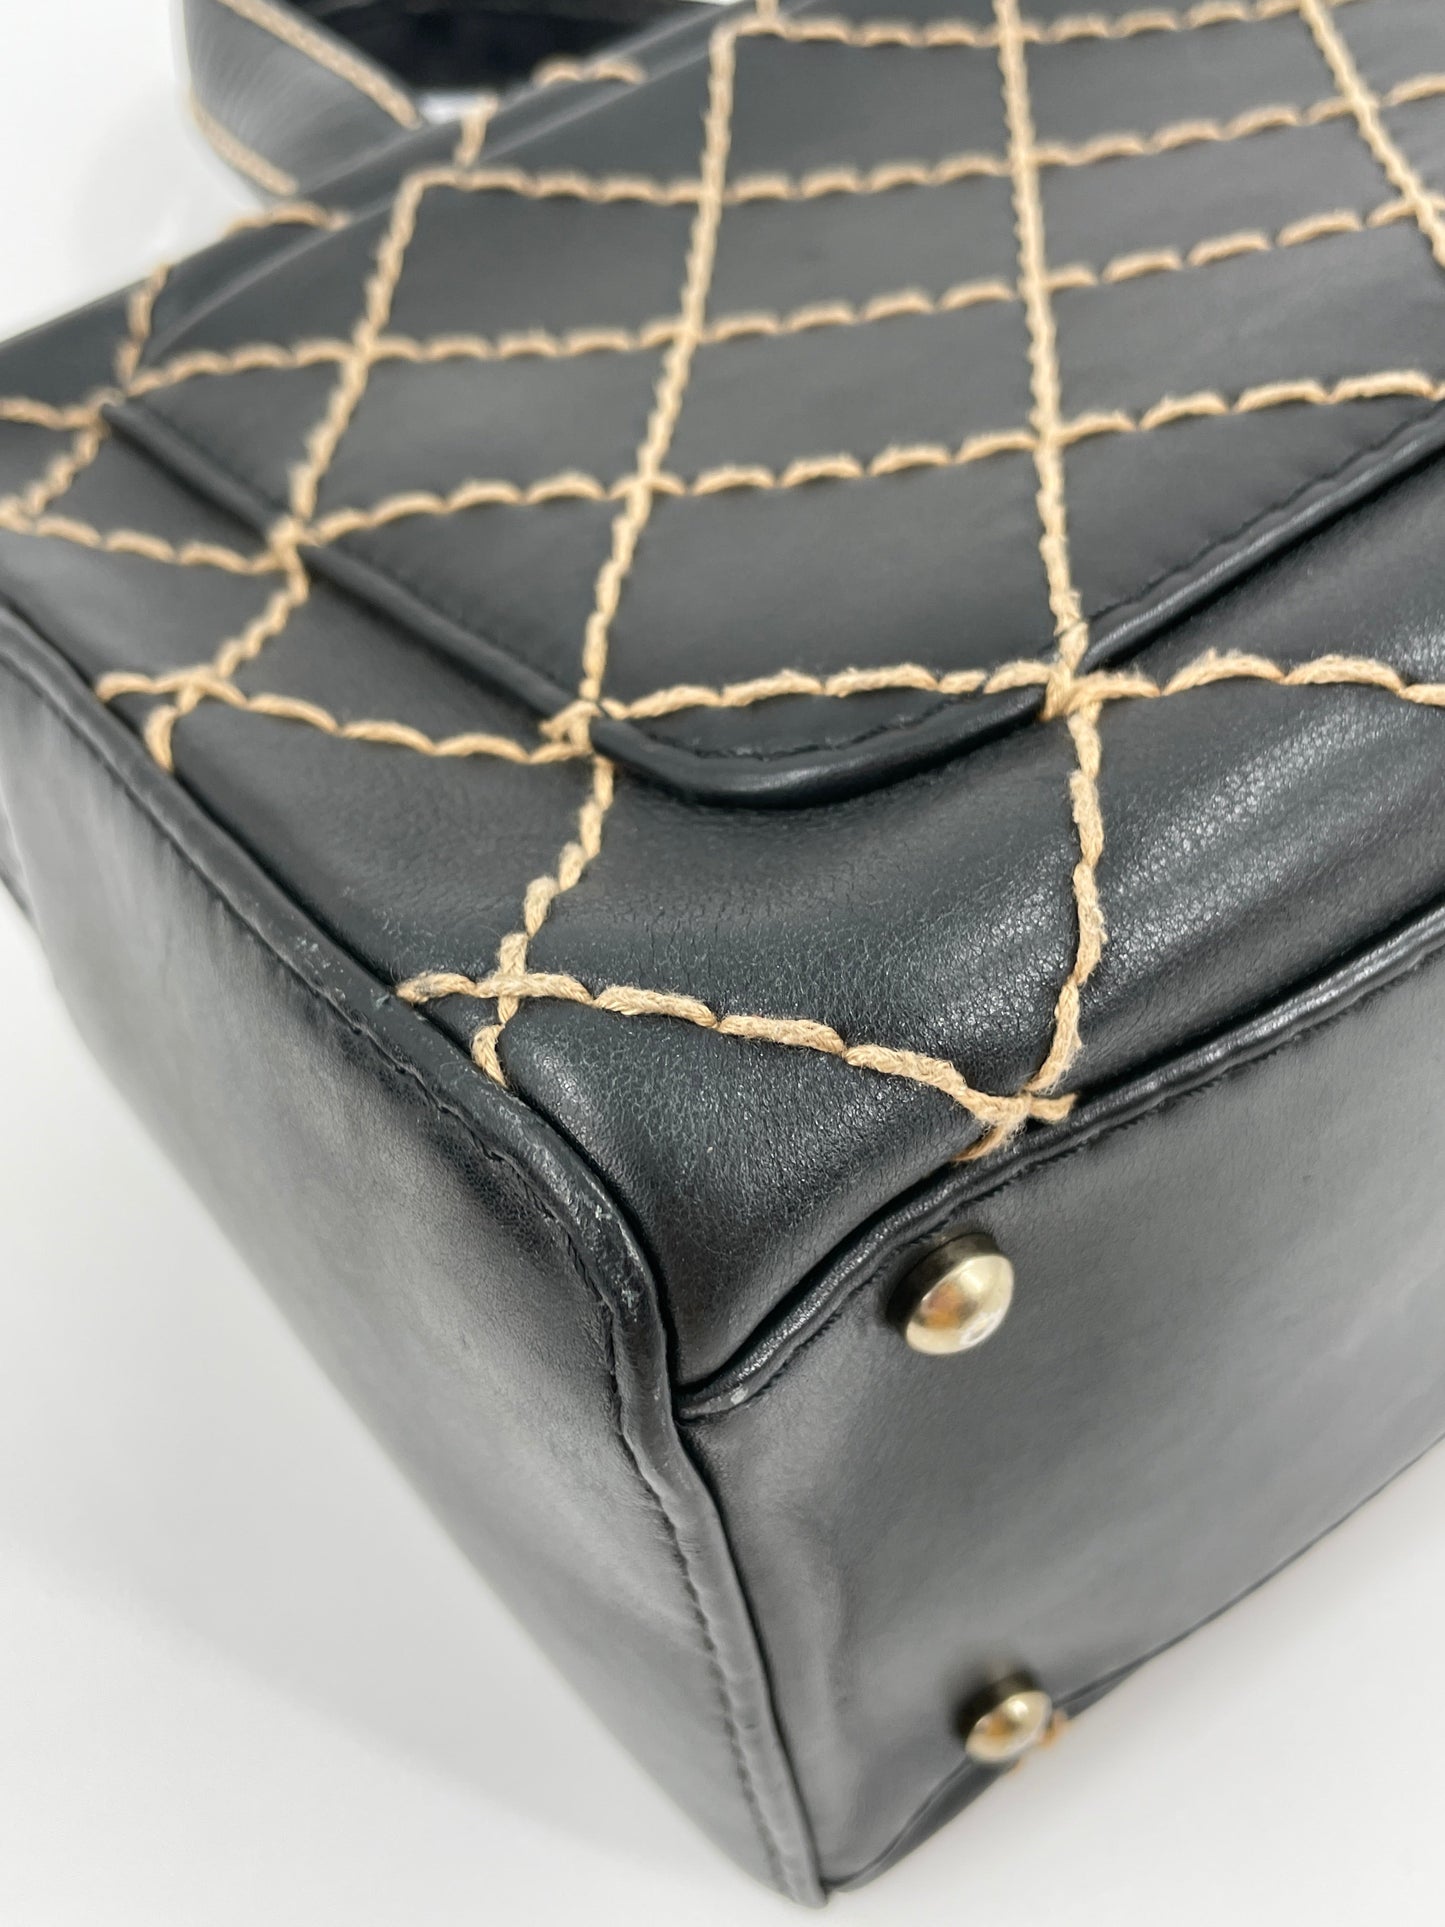 [CHANEL] Wild stitch handbag